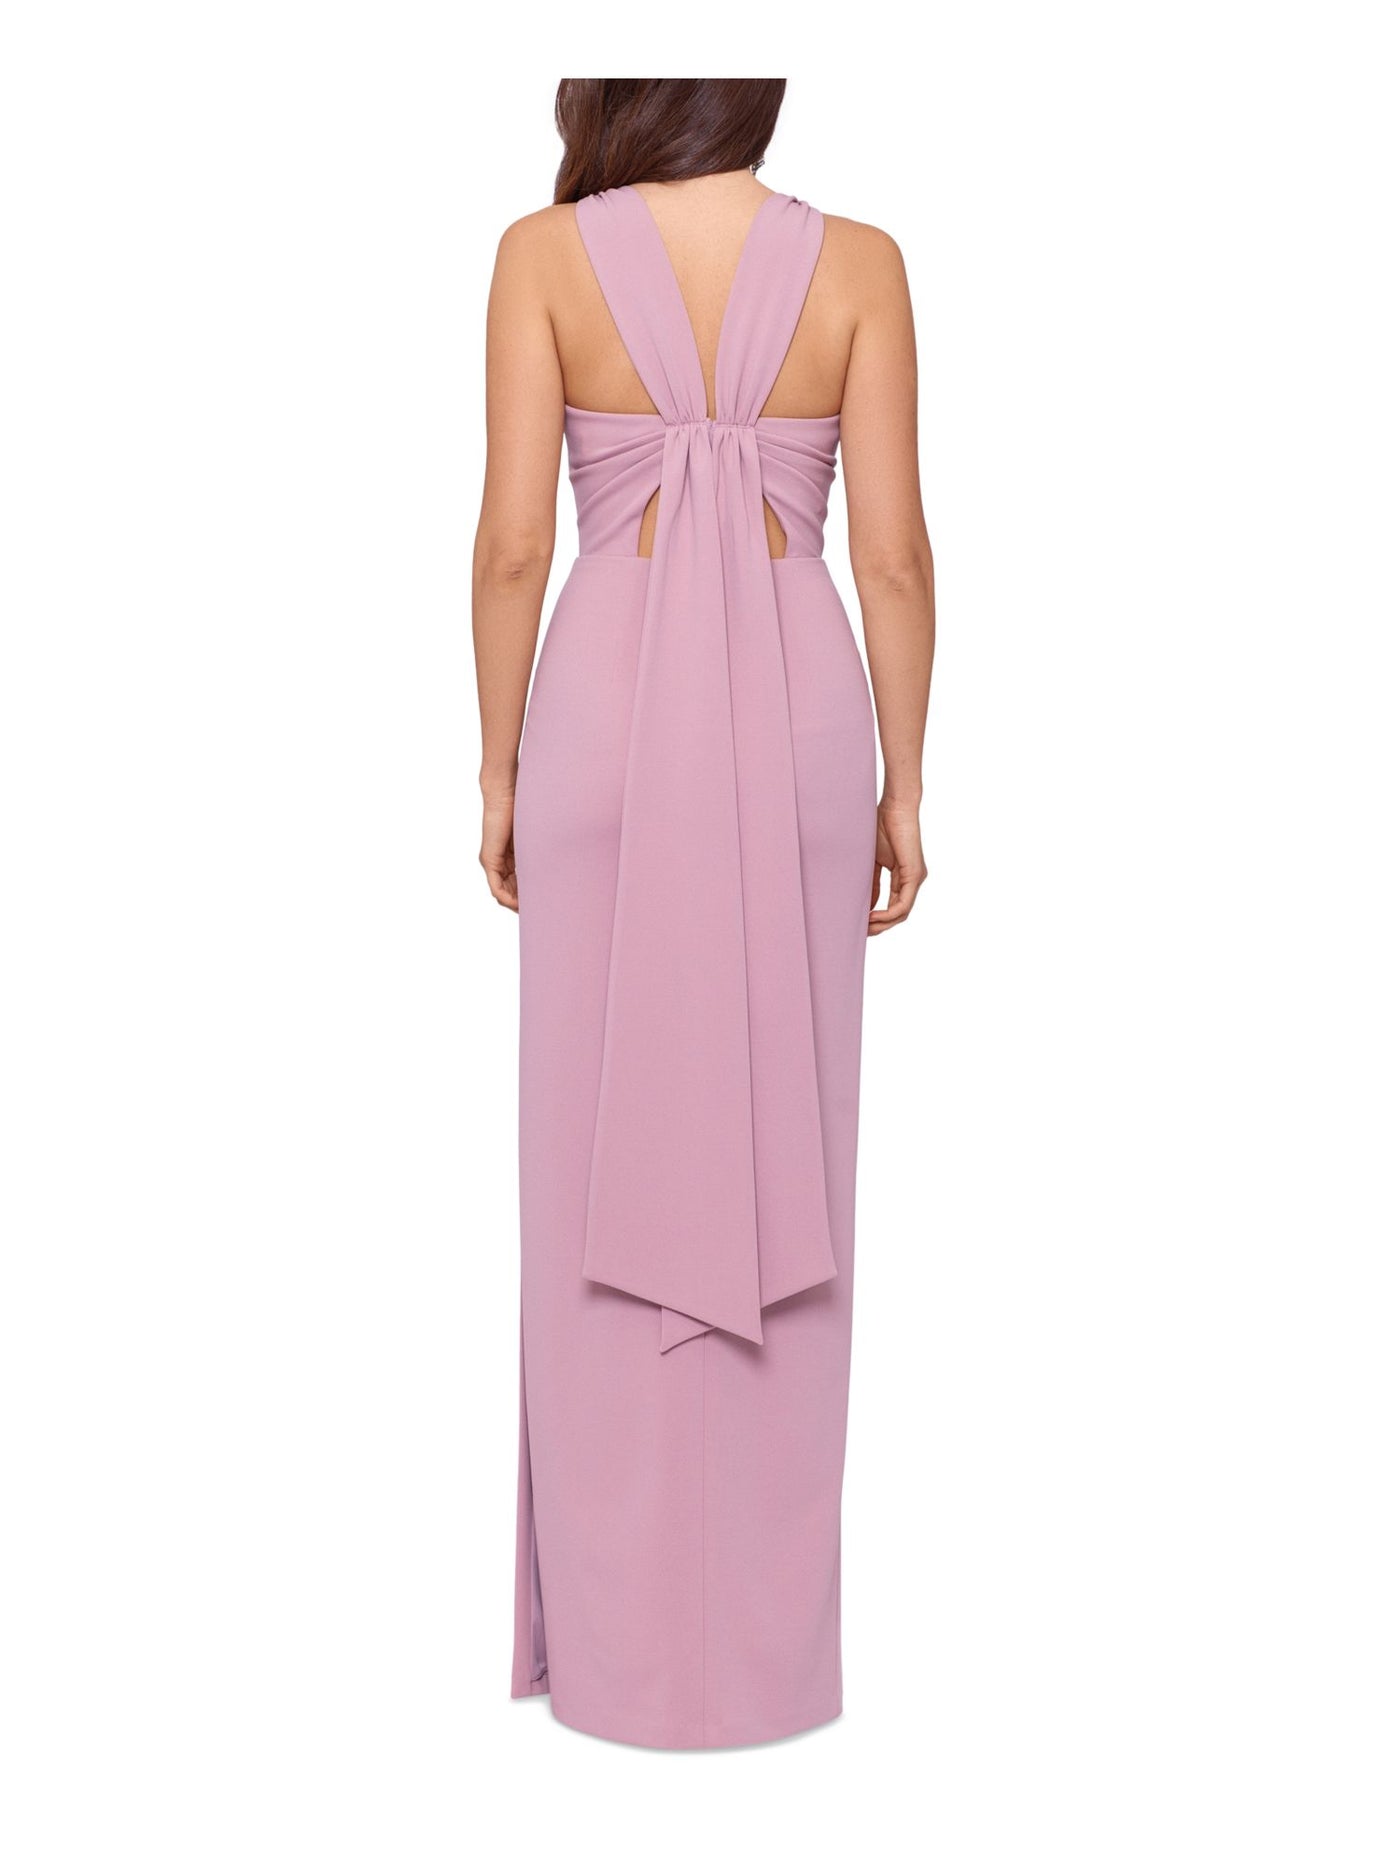 BETSY & ADAM Womens Pink Zippered Slitted Draped Tie Detail Cutout Sleeveless Crew Neck Full-Length Evening Gown Dress 4